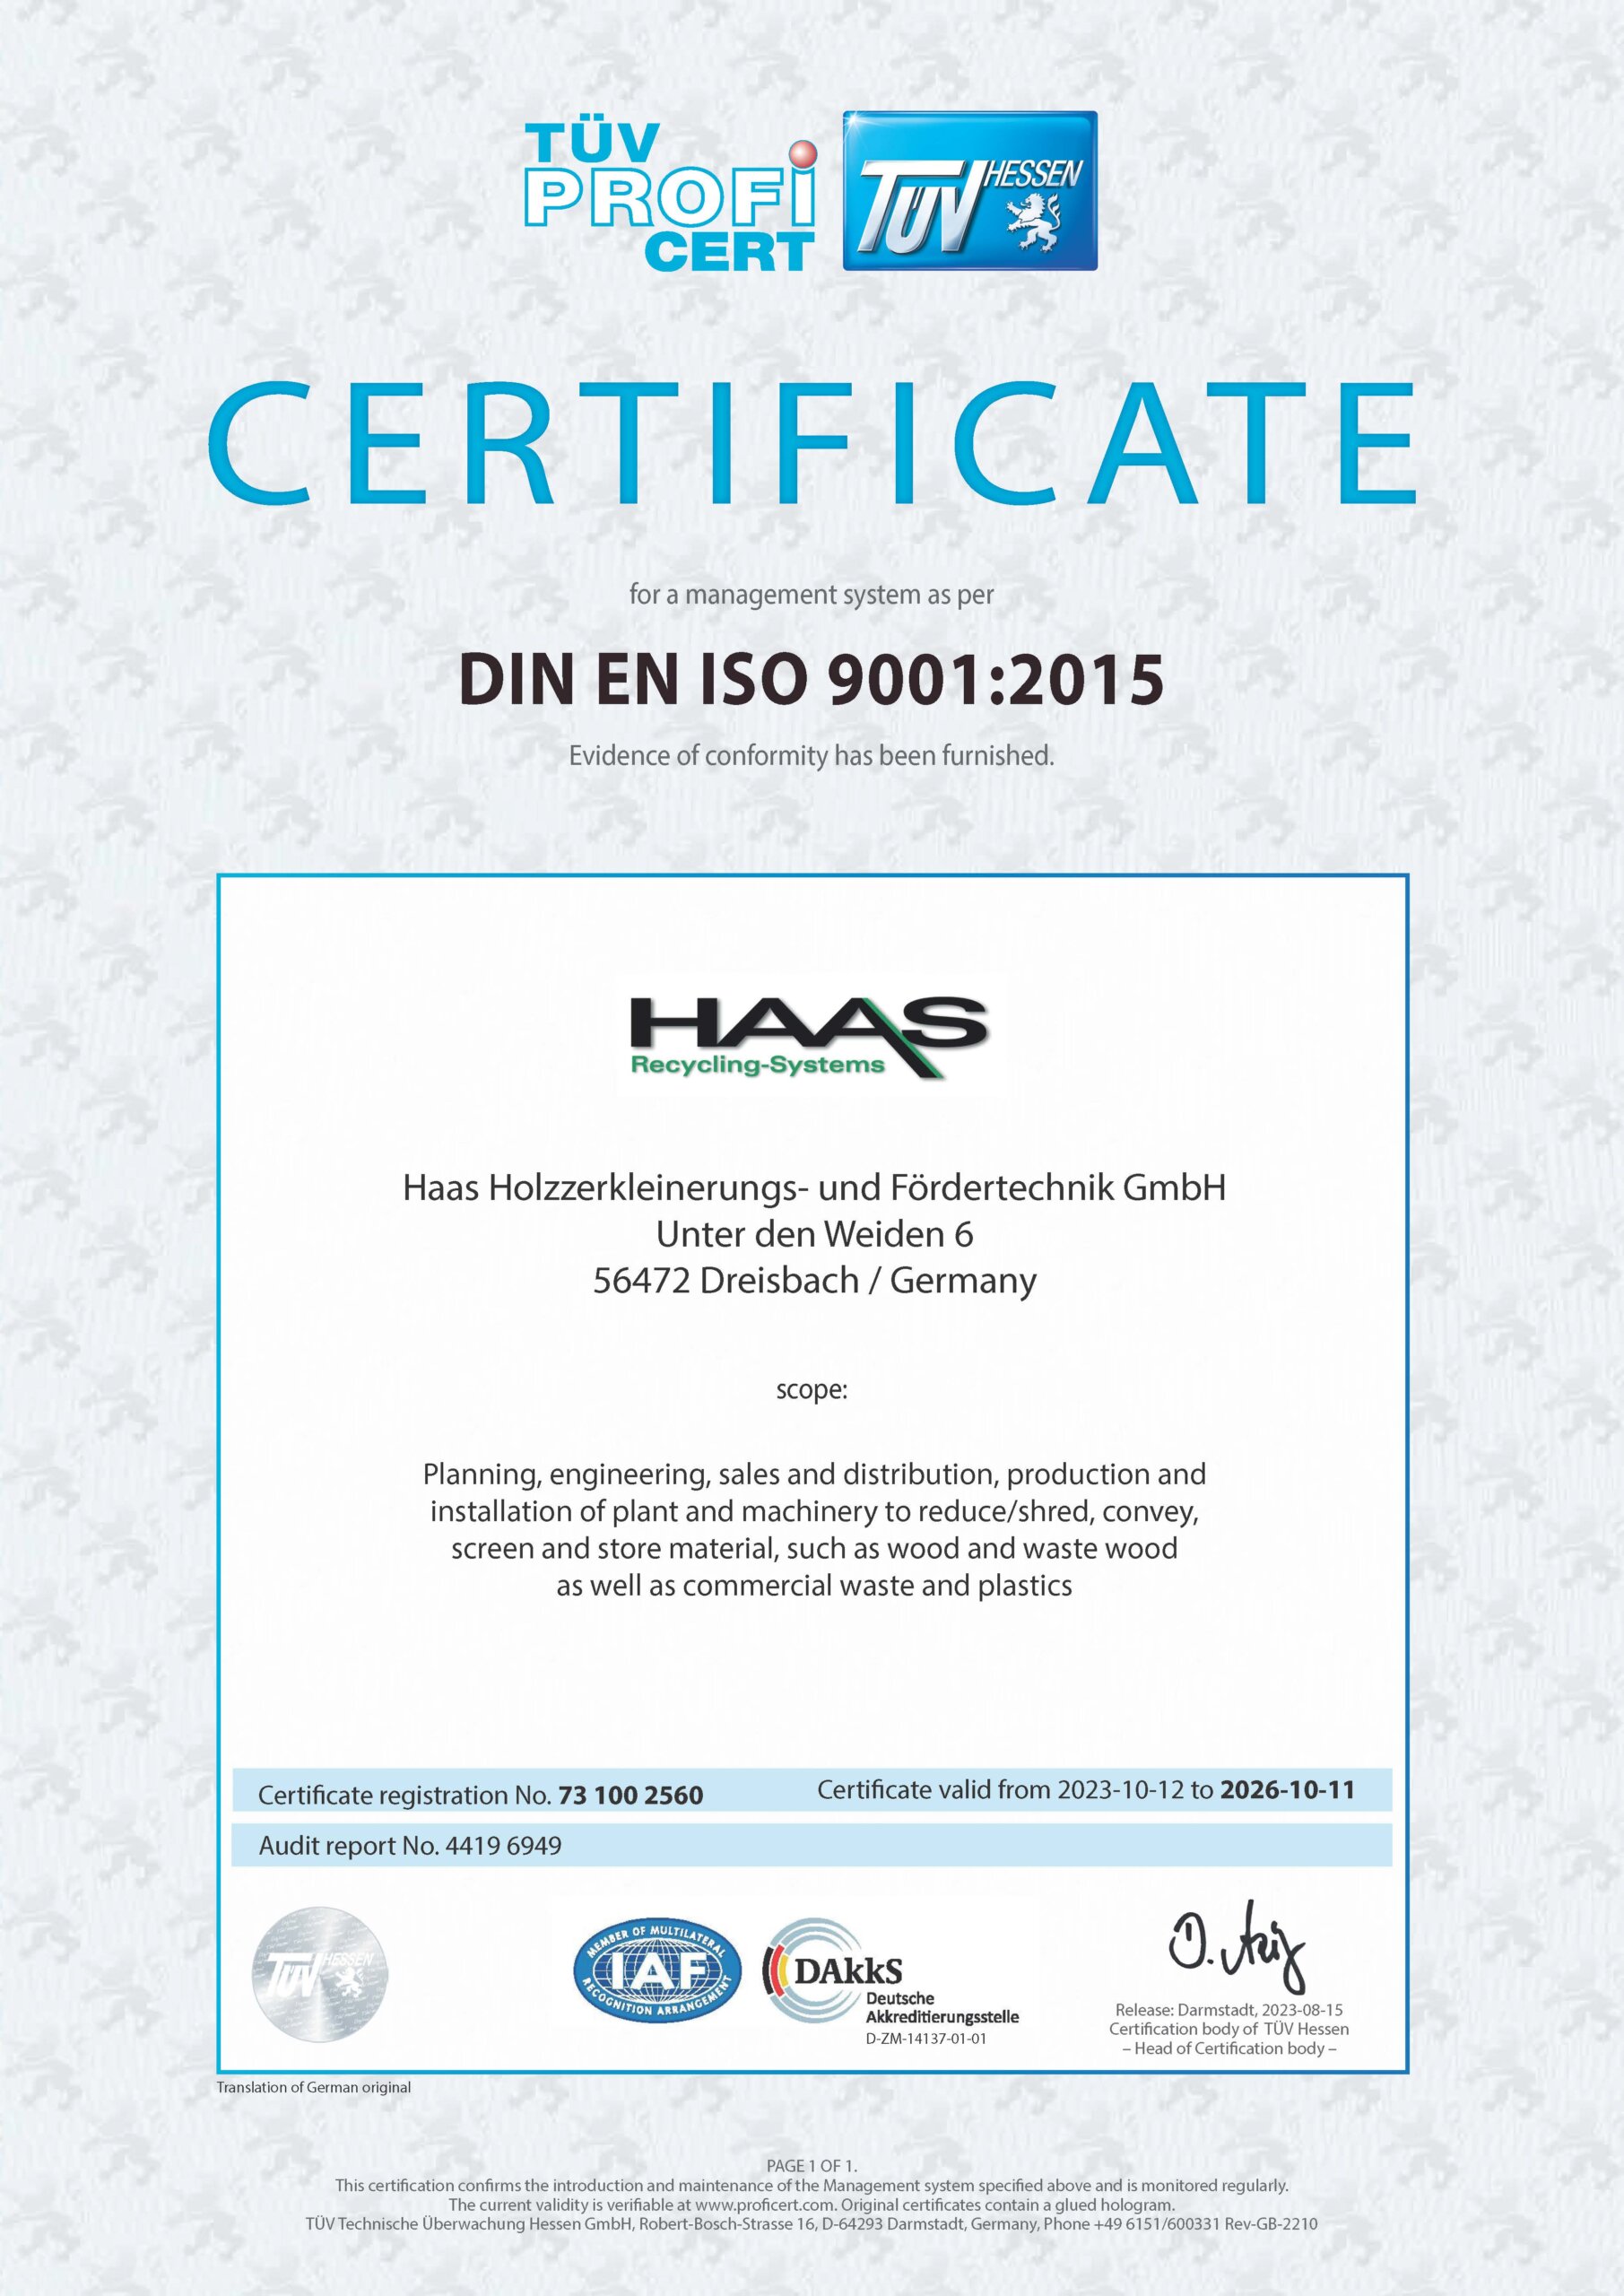 Technical Control Board (TÜV) Certificate Hessen